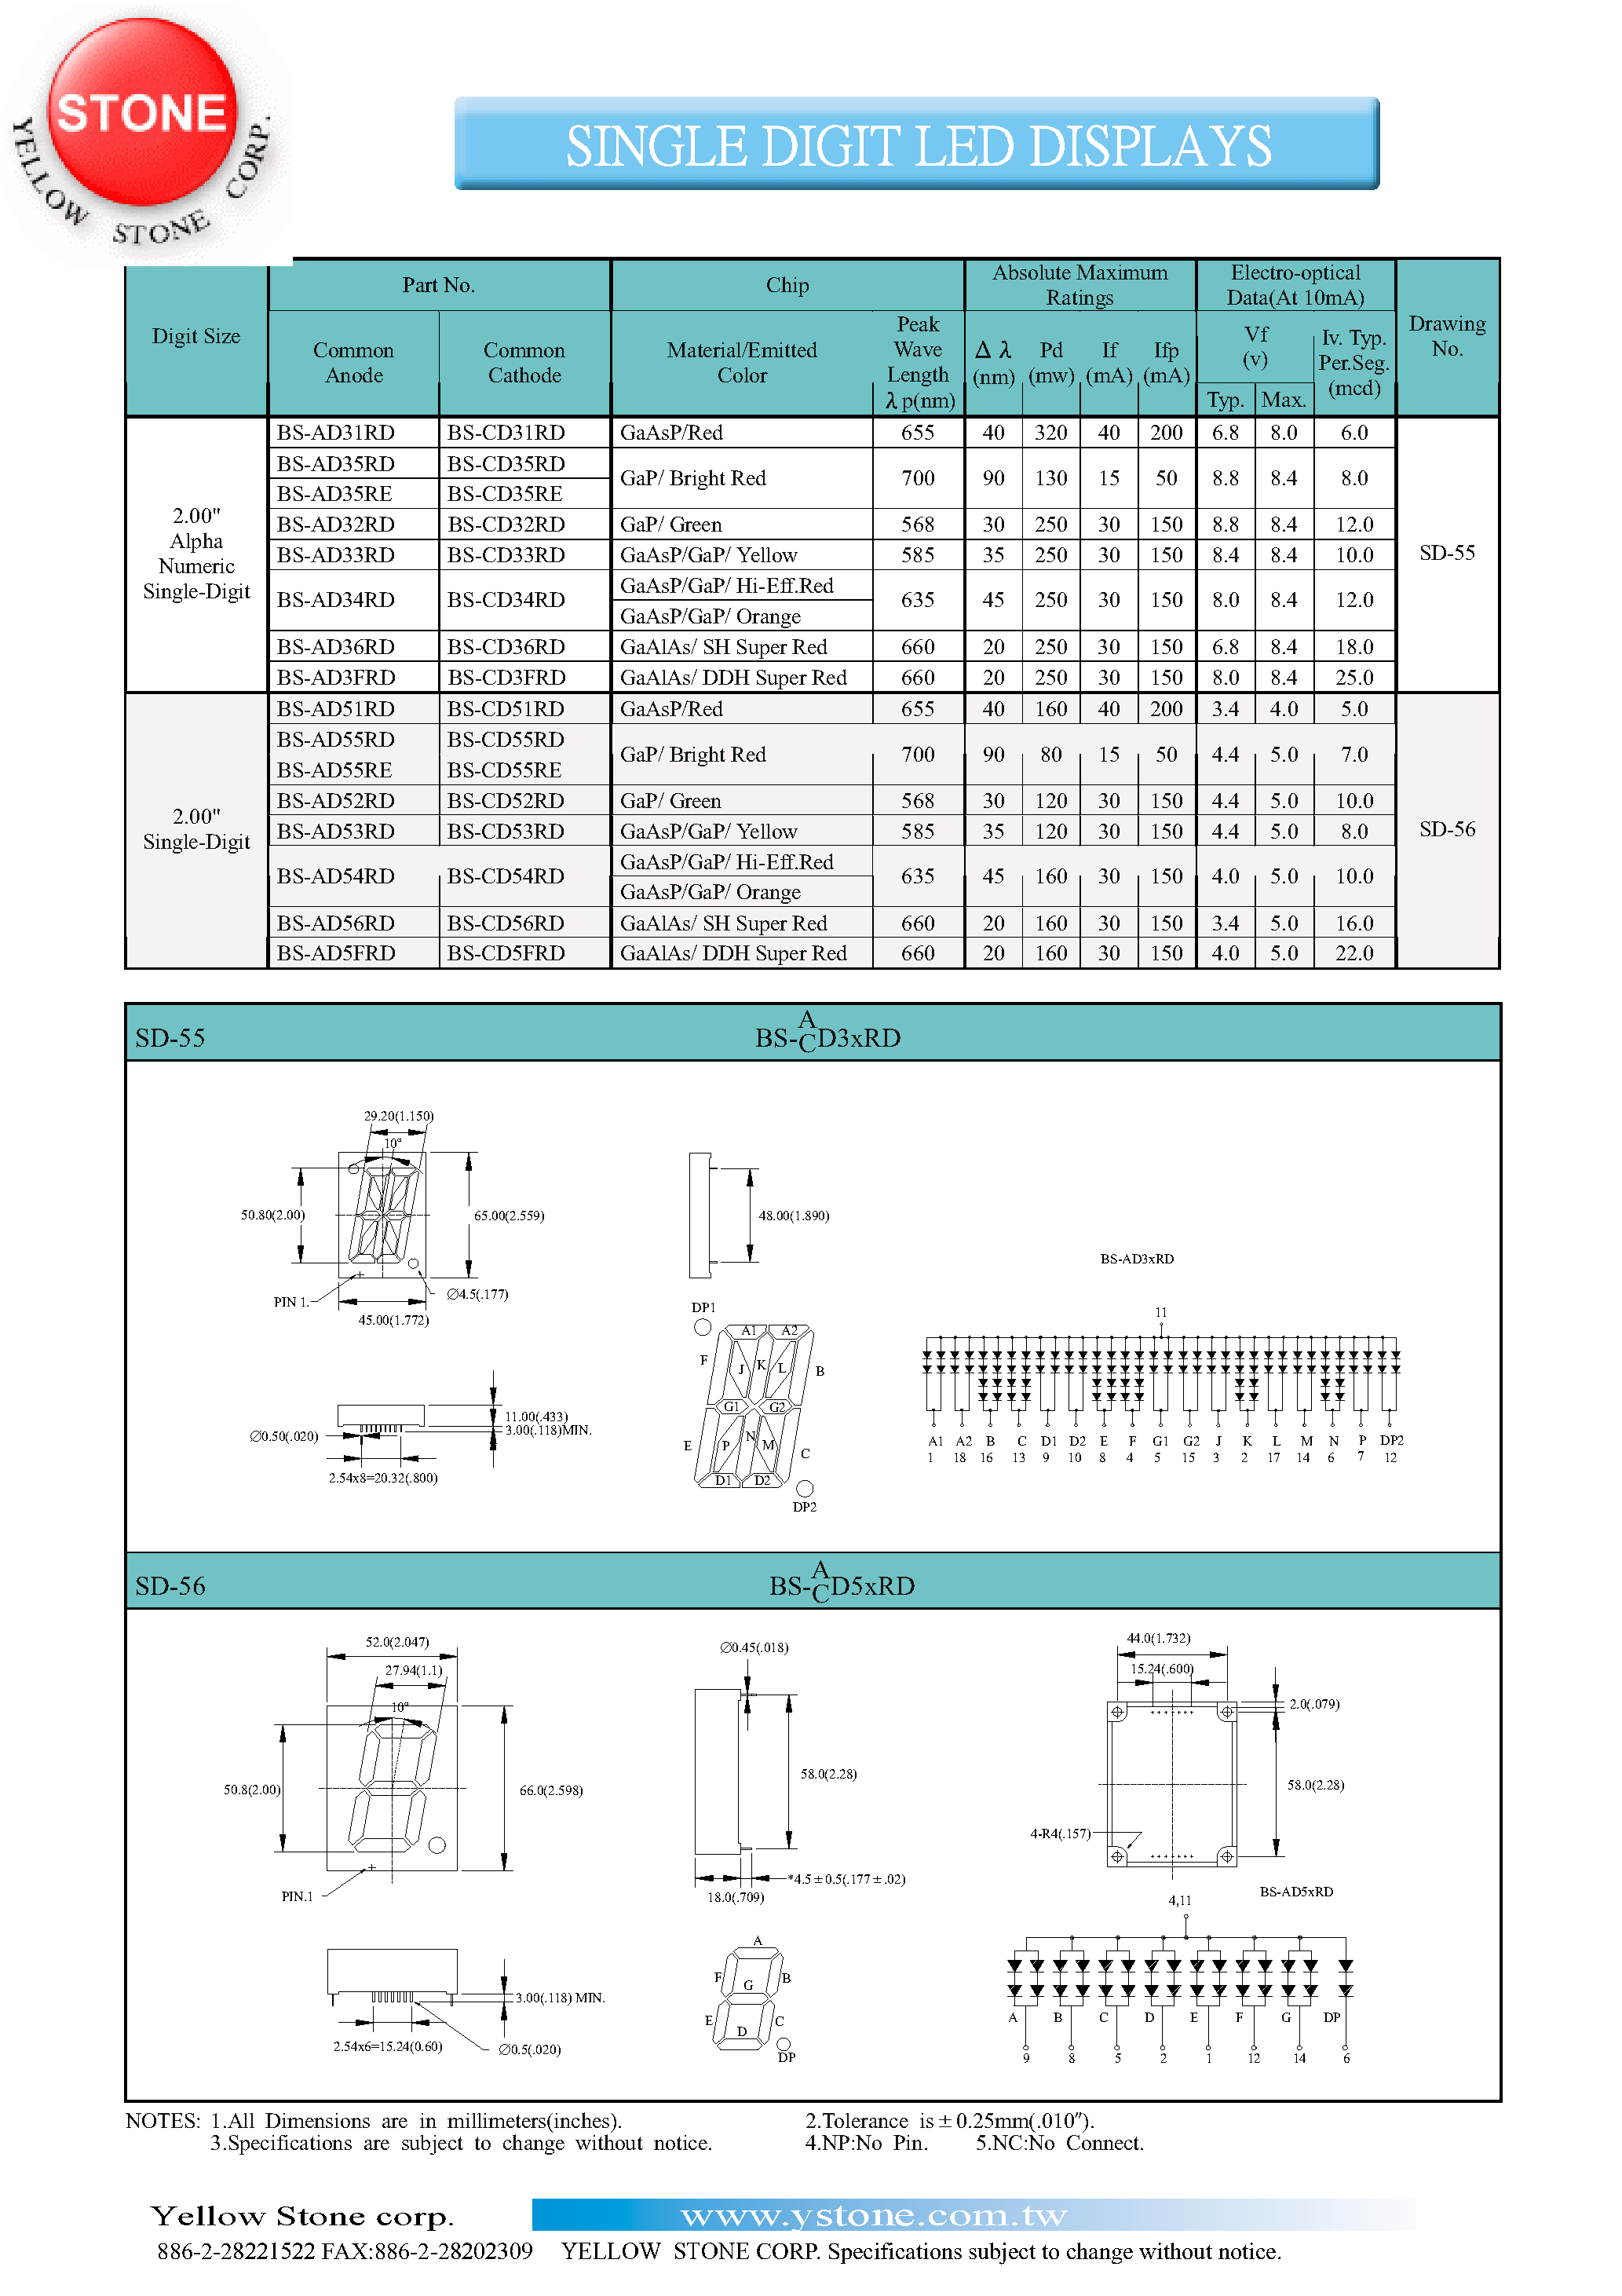 Datasheet BS-AD35RE - SINGLE DIGIT LED DISPLAYS page 1